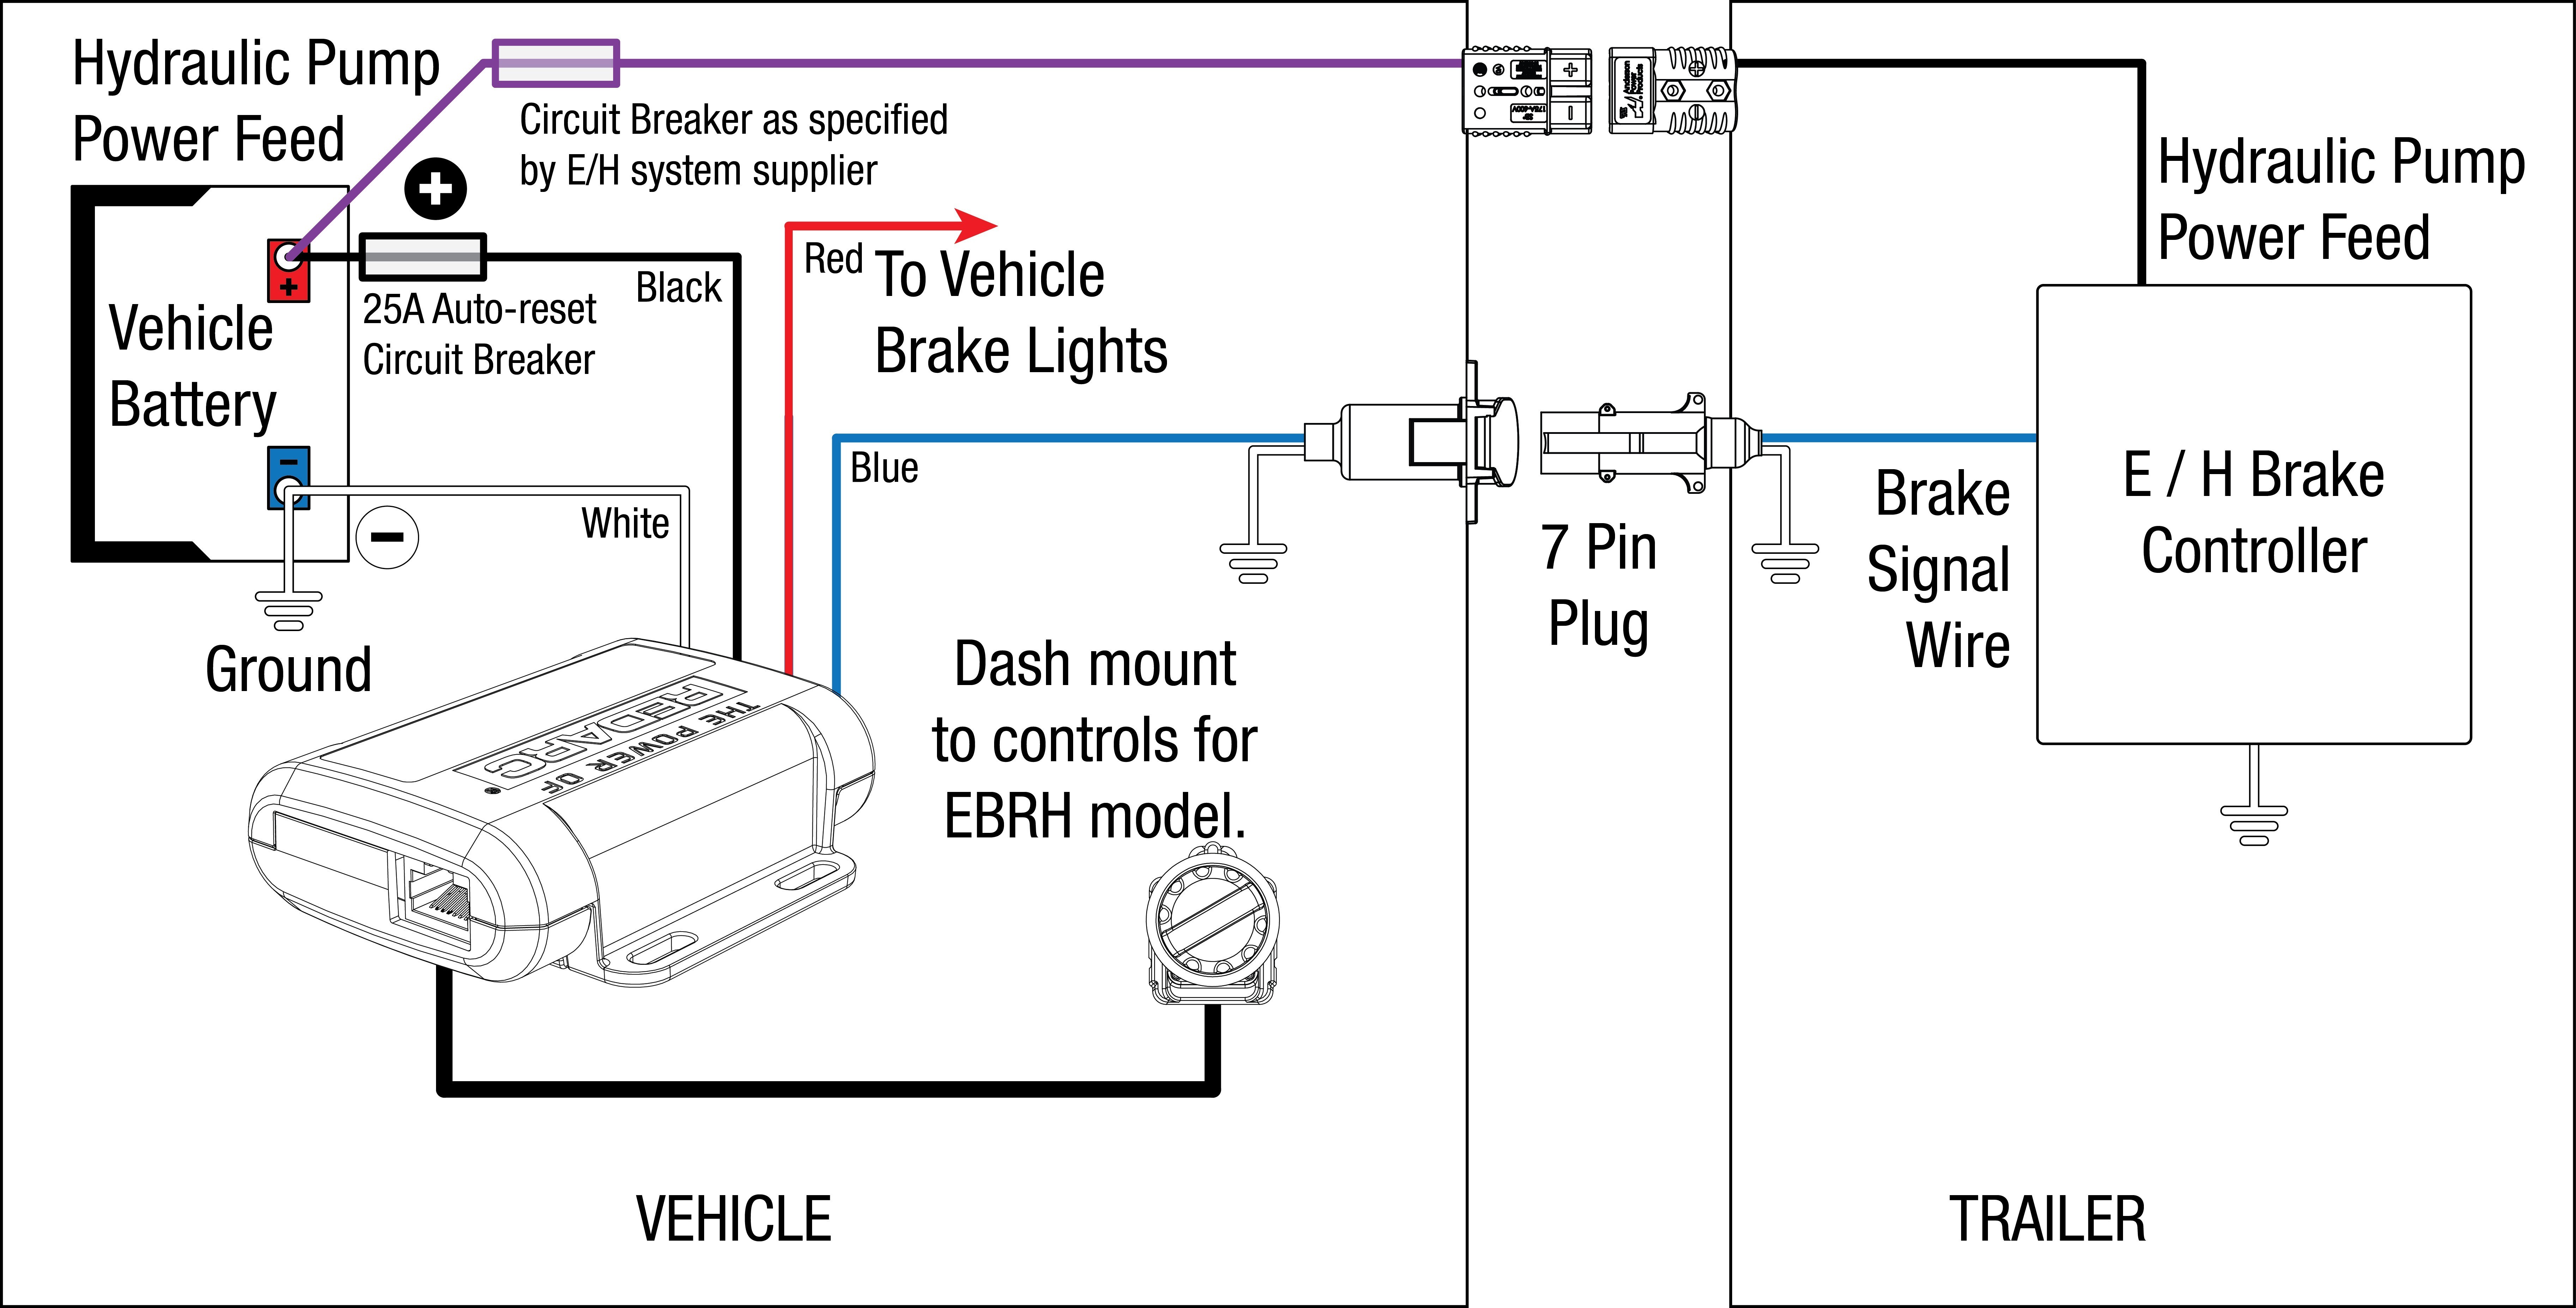 Brake Light Wiring Diagram Chevy Brake Lights Wiring Diagram Luxury 3 Wire Tail Light Wiring Diagram Of Brake Light Wiring Diagram Chevy